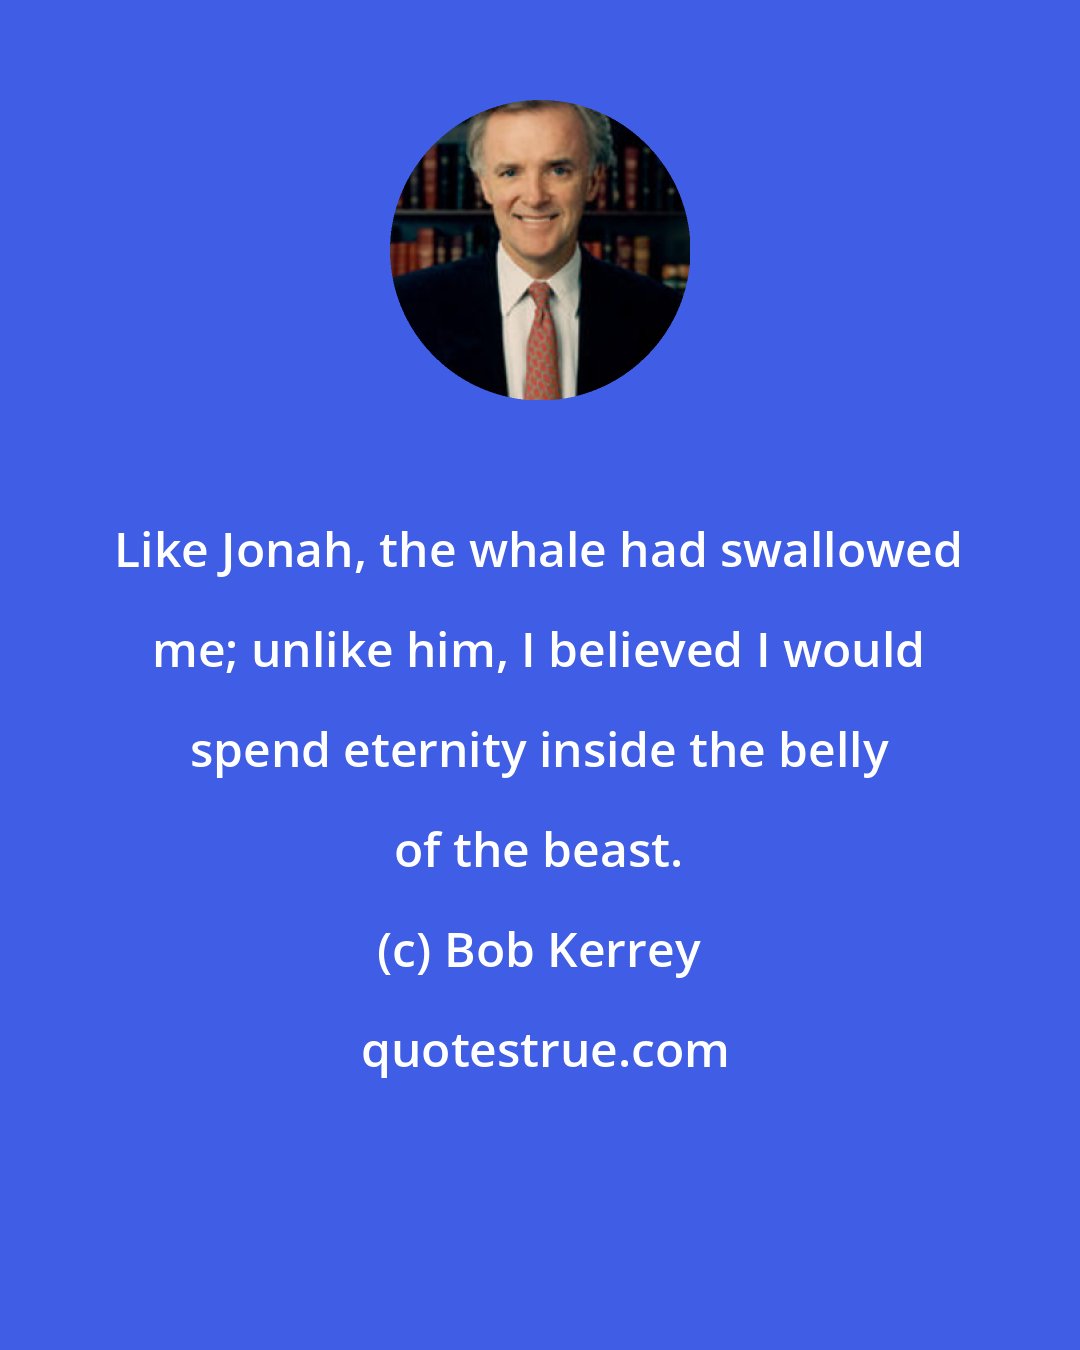 Bob Kerrey: Like Jonah, the whale had swallowed me; unlike him, I believed I would spend eternity inside the belly of the beast.